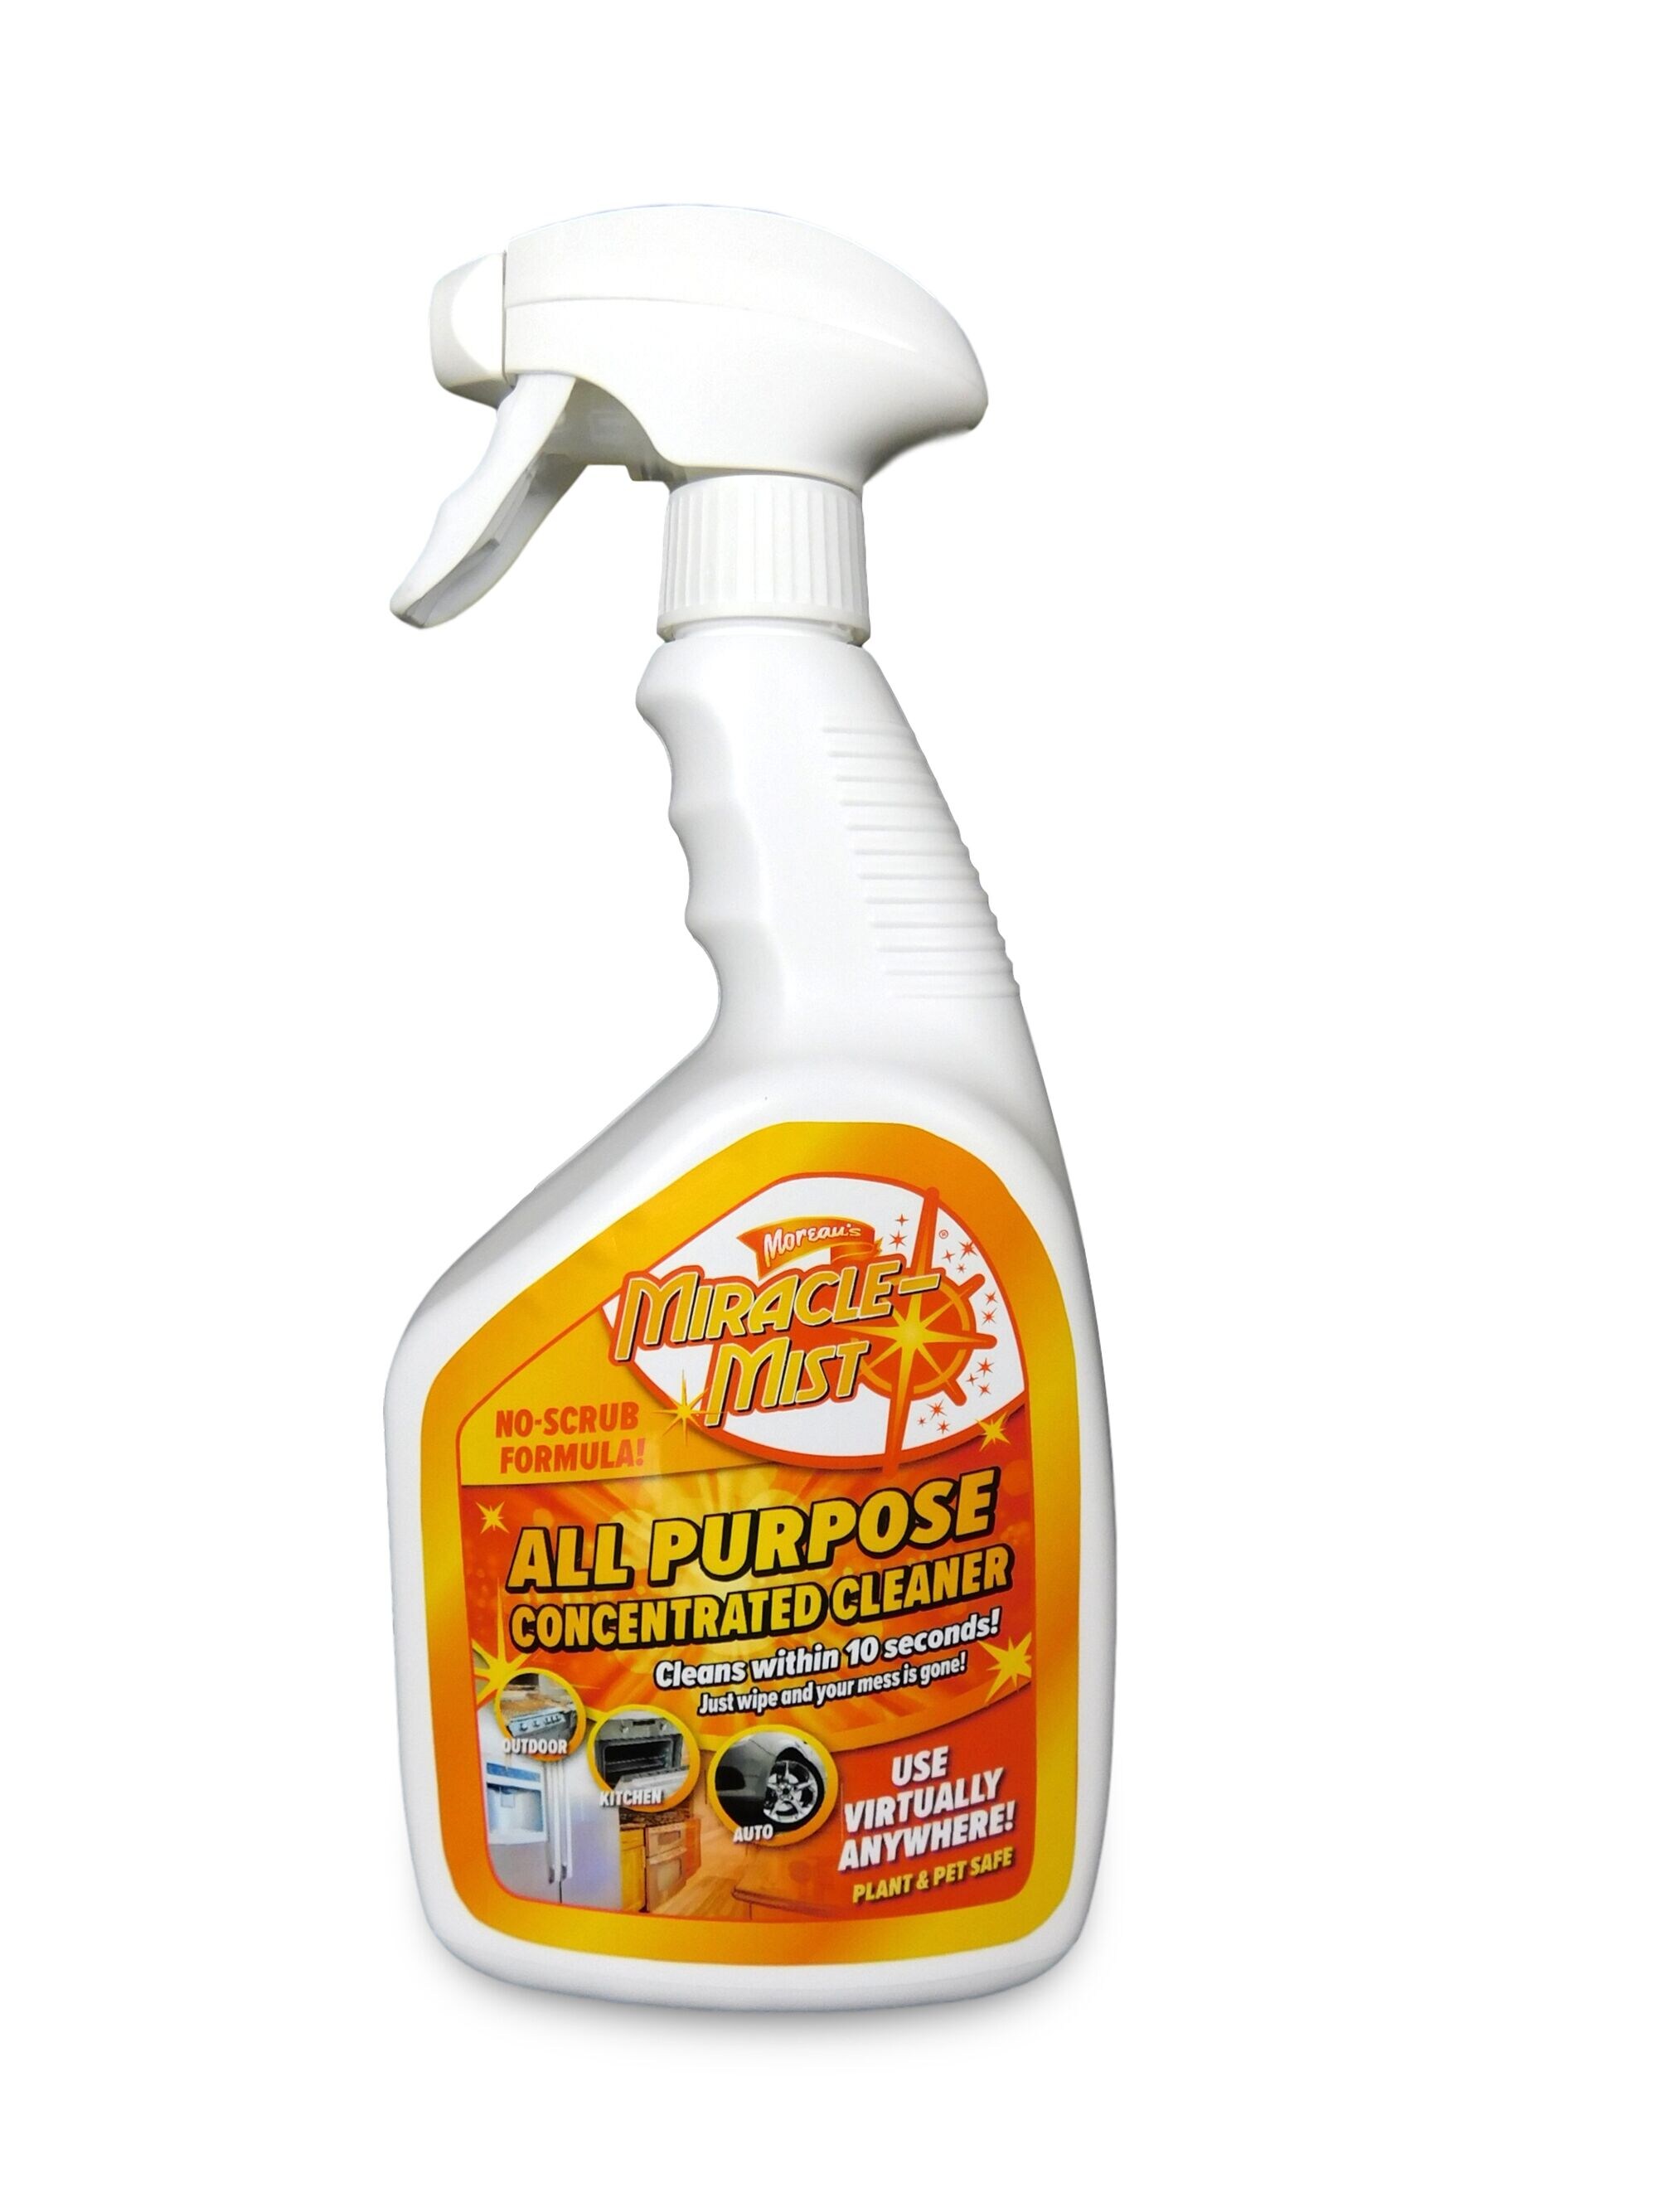 Mr. Clean Clean Freak Mist Spray Starter Kit 16-fl oz Lavender Liquid  All-Purpose Cleaner